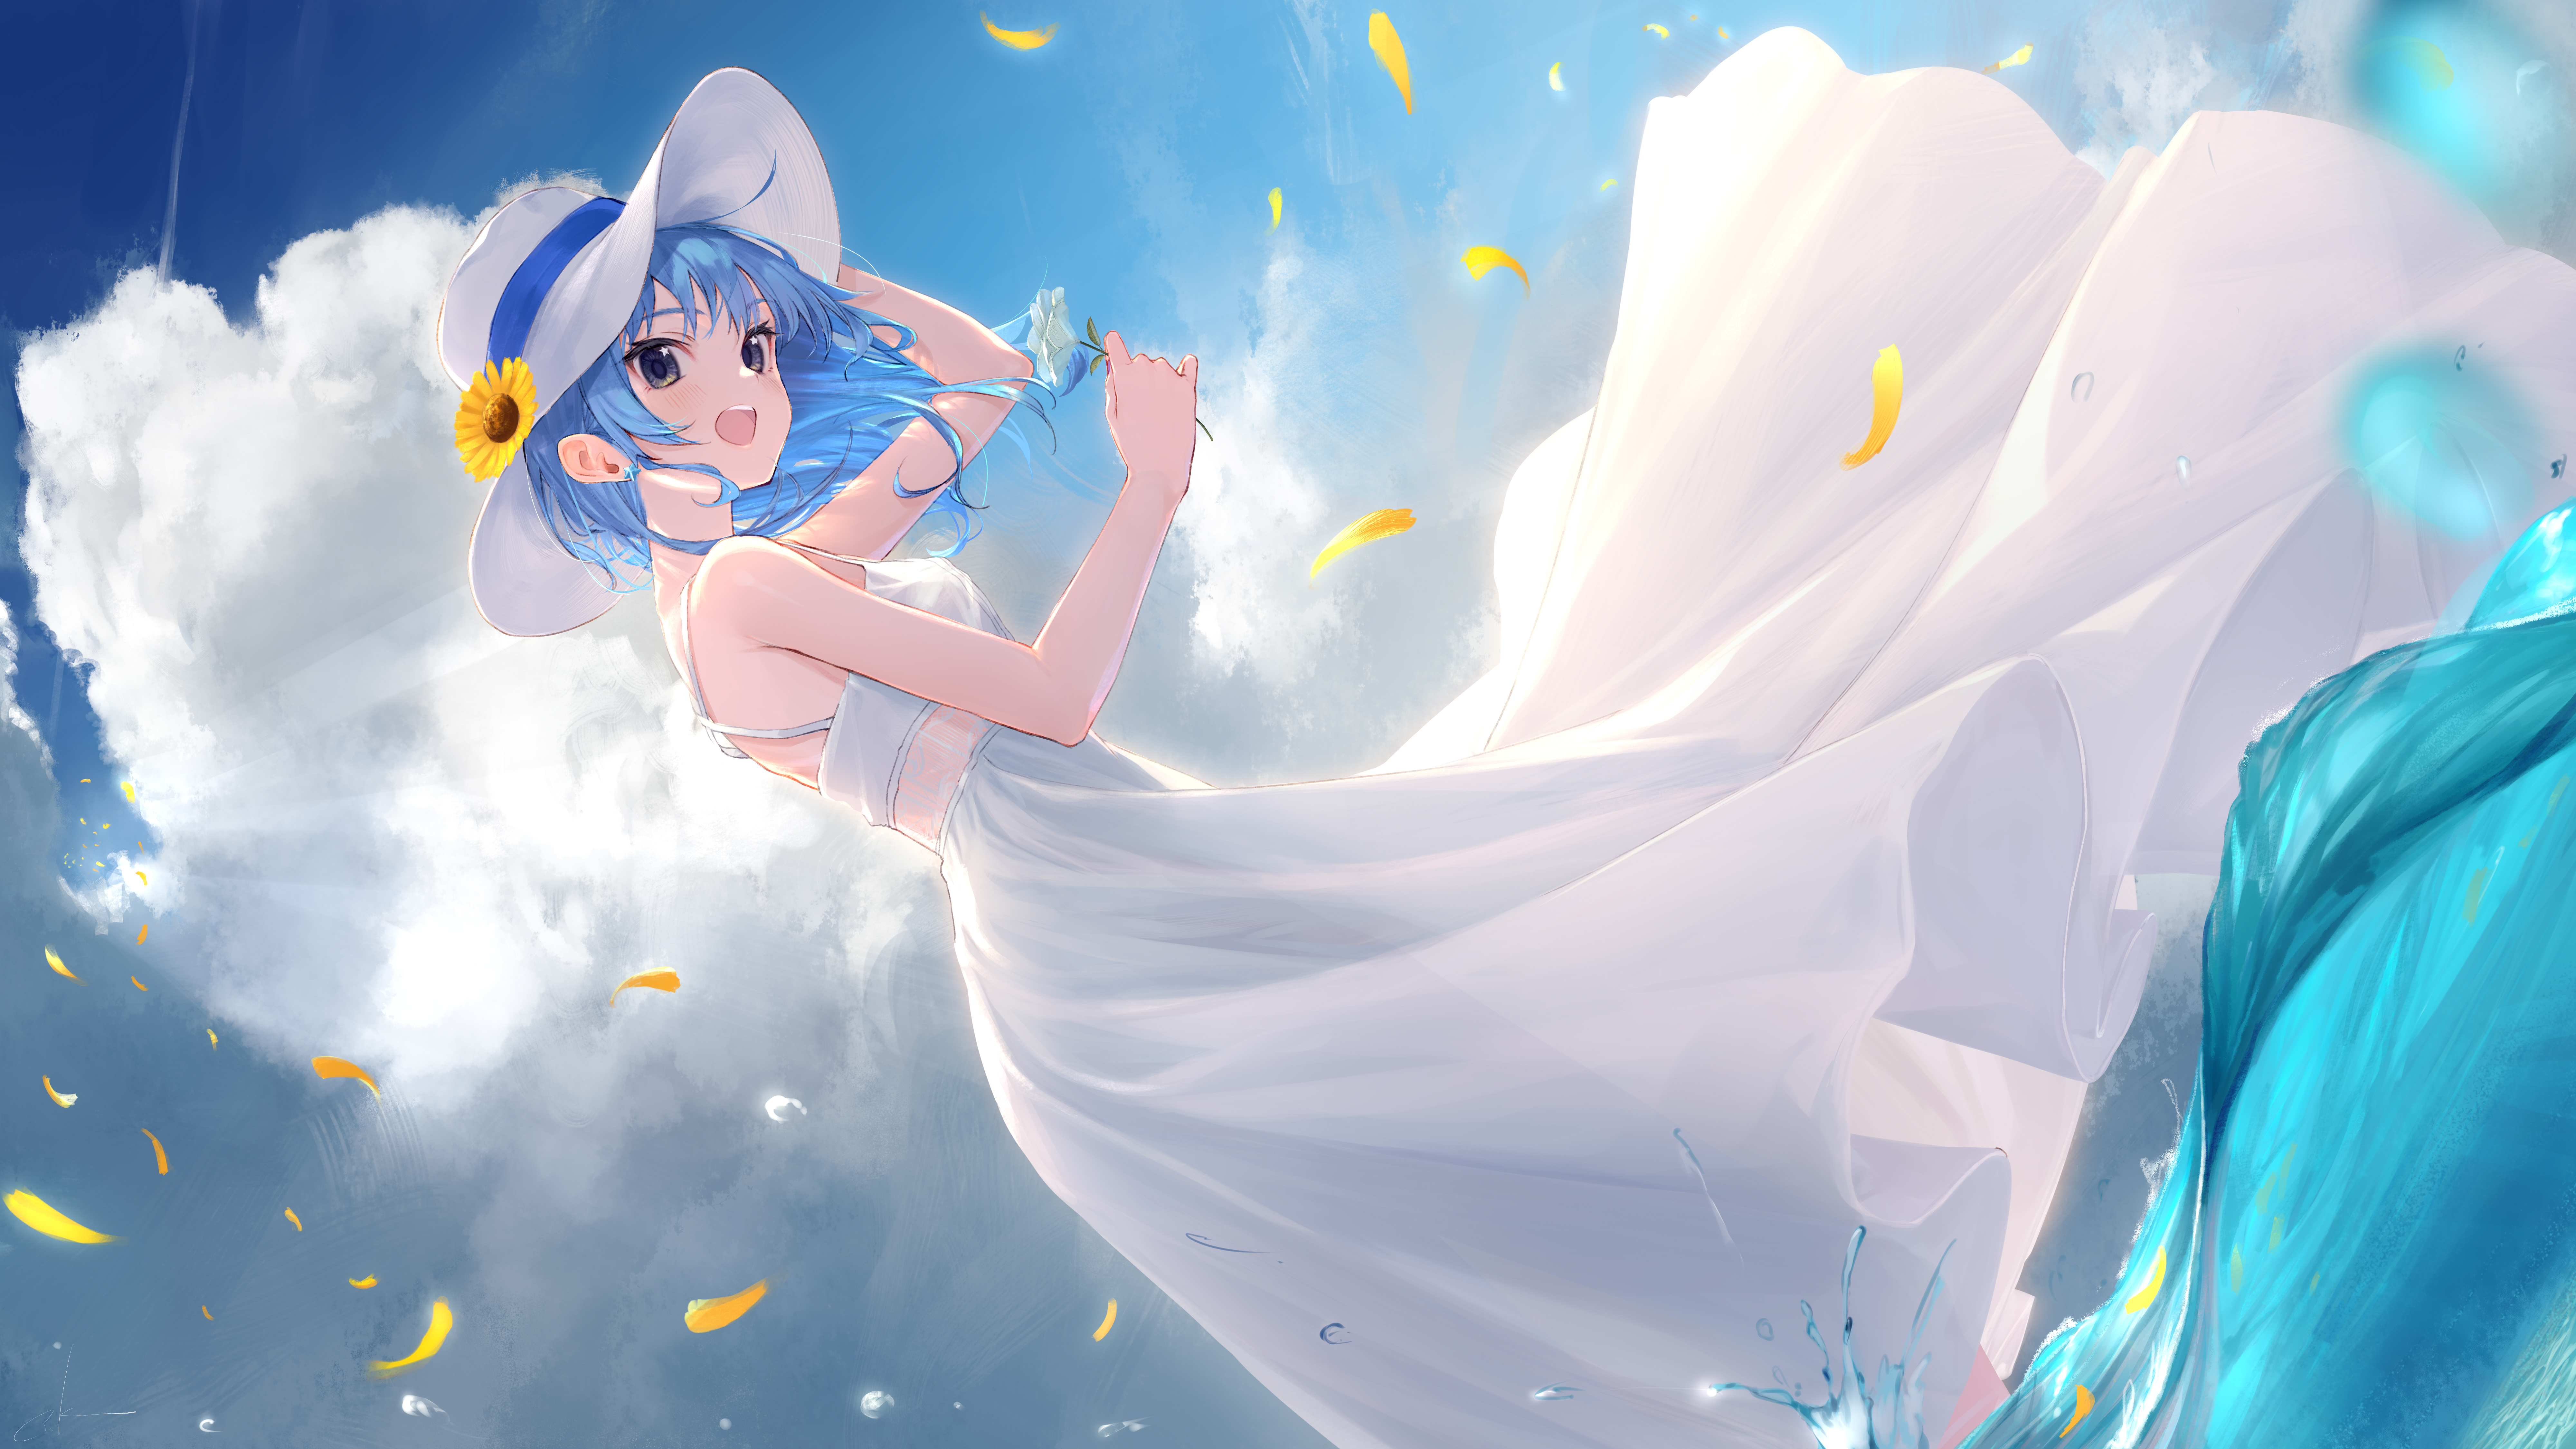 Anime 8000x4500 anime anime girls digital art artwork 2D portrait Hoshimachi Suisei Hololive Takubon sun dress dress hat blue hair petals